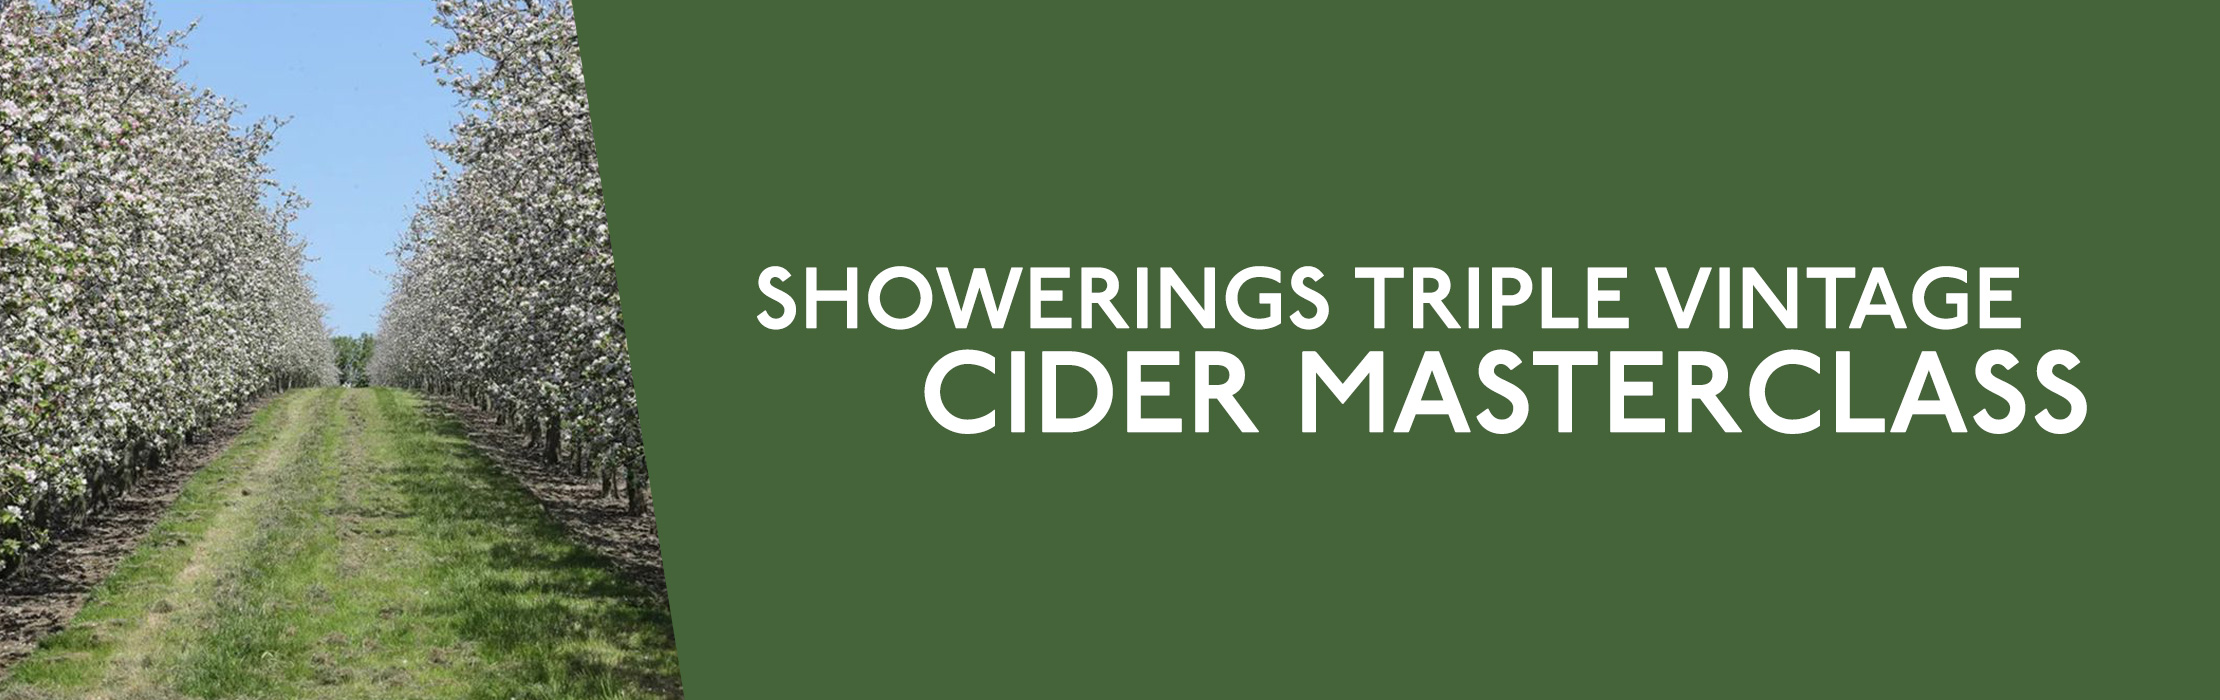 Showerings-Triple-Vintage-Cider-Masterclass